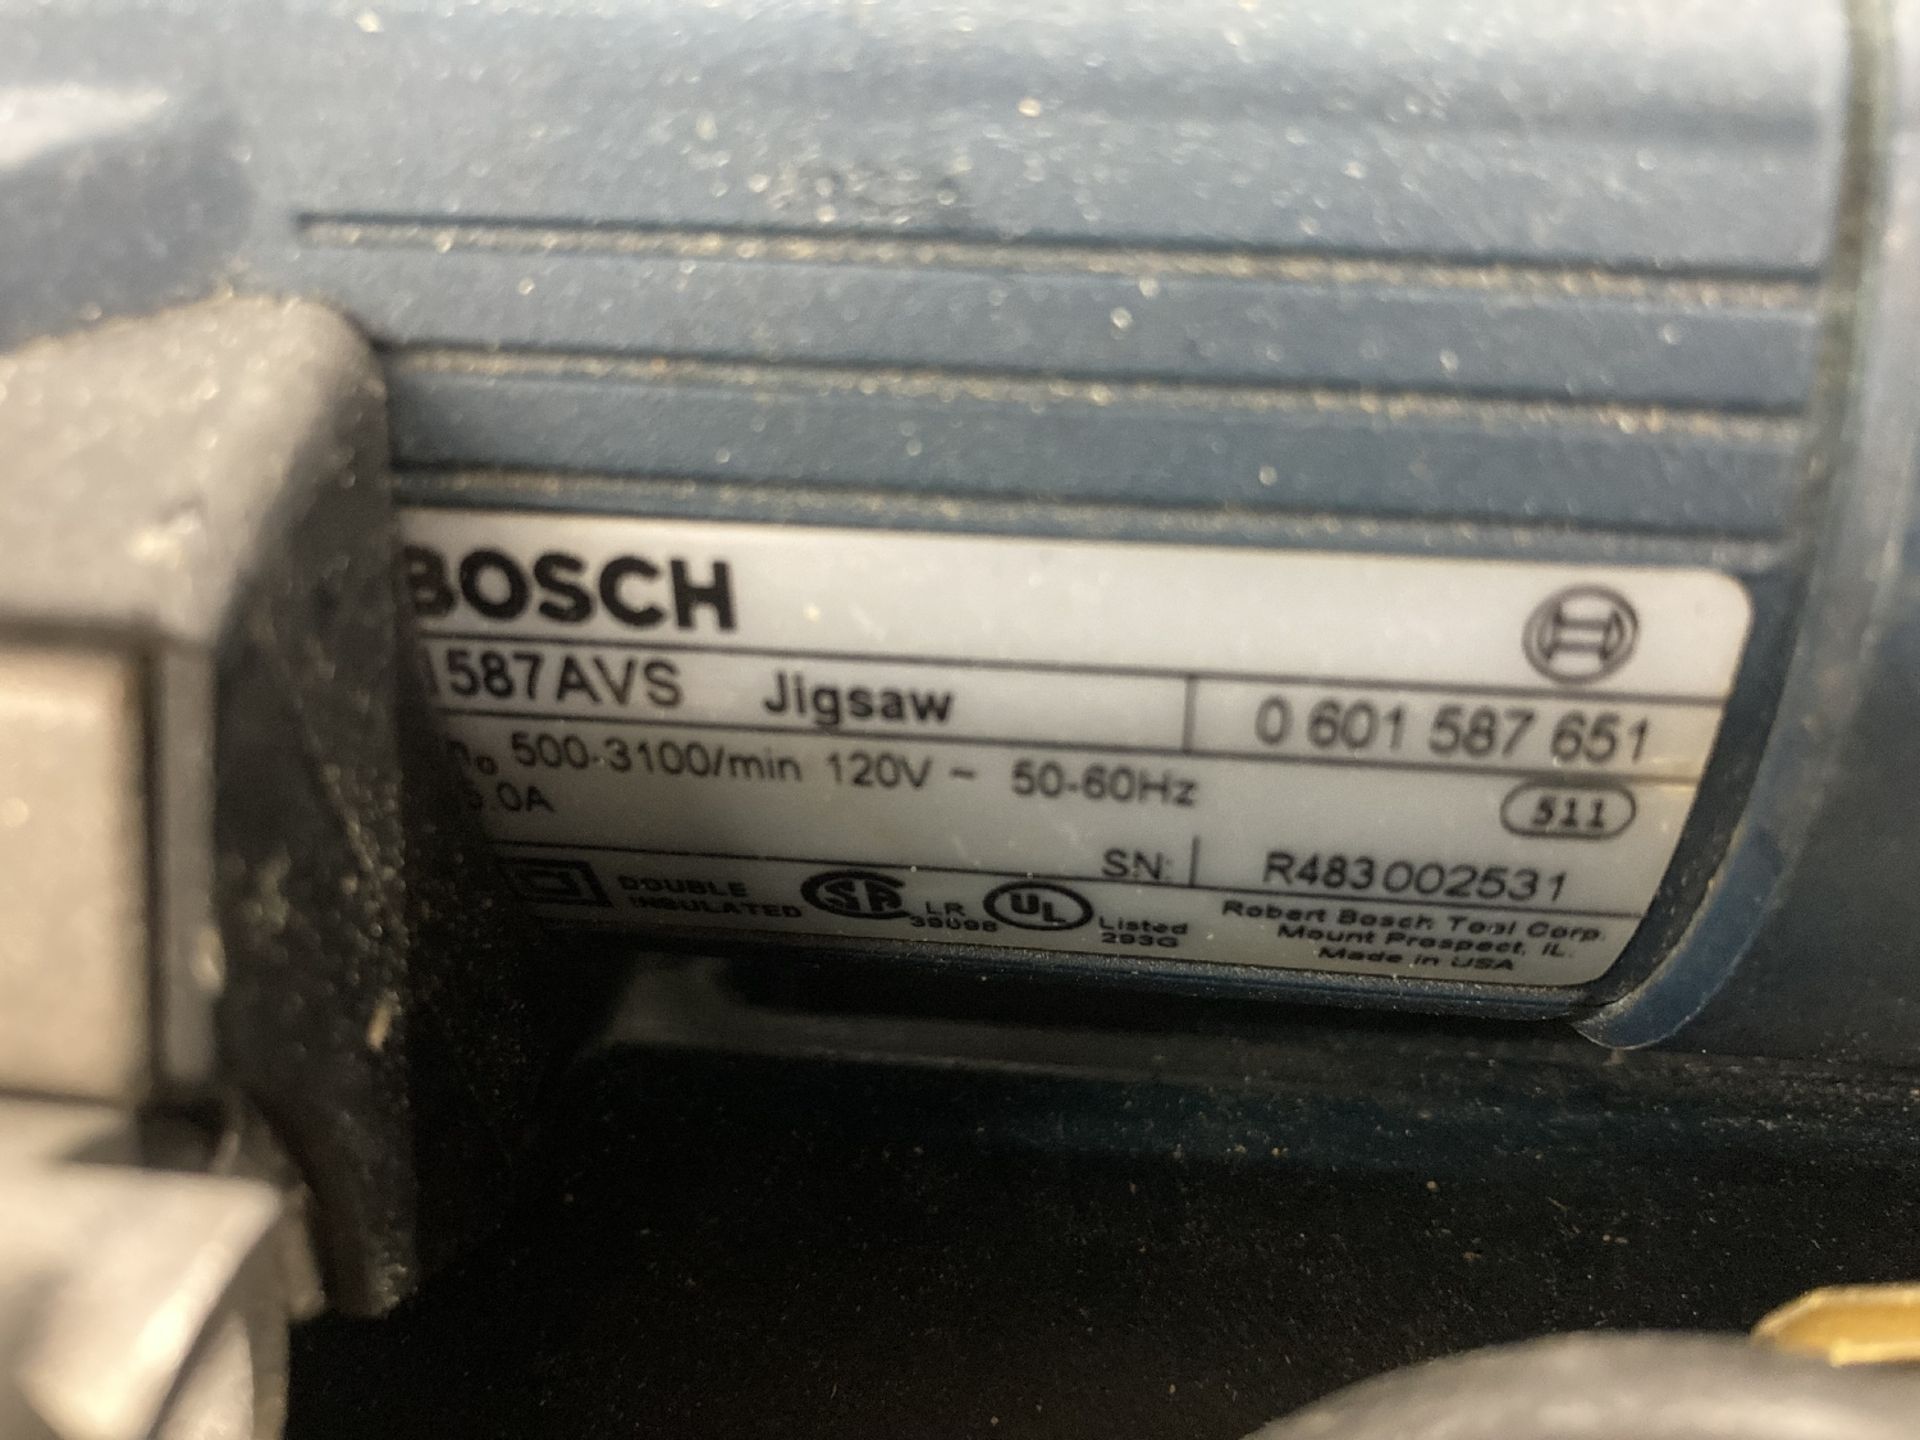 Bosch 587AVS Jigsaw - Image 2 of 2